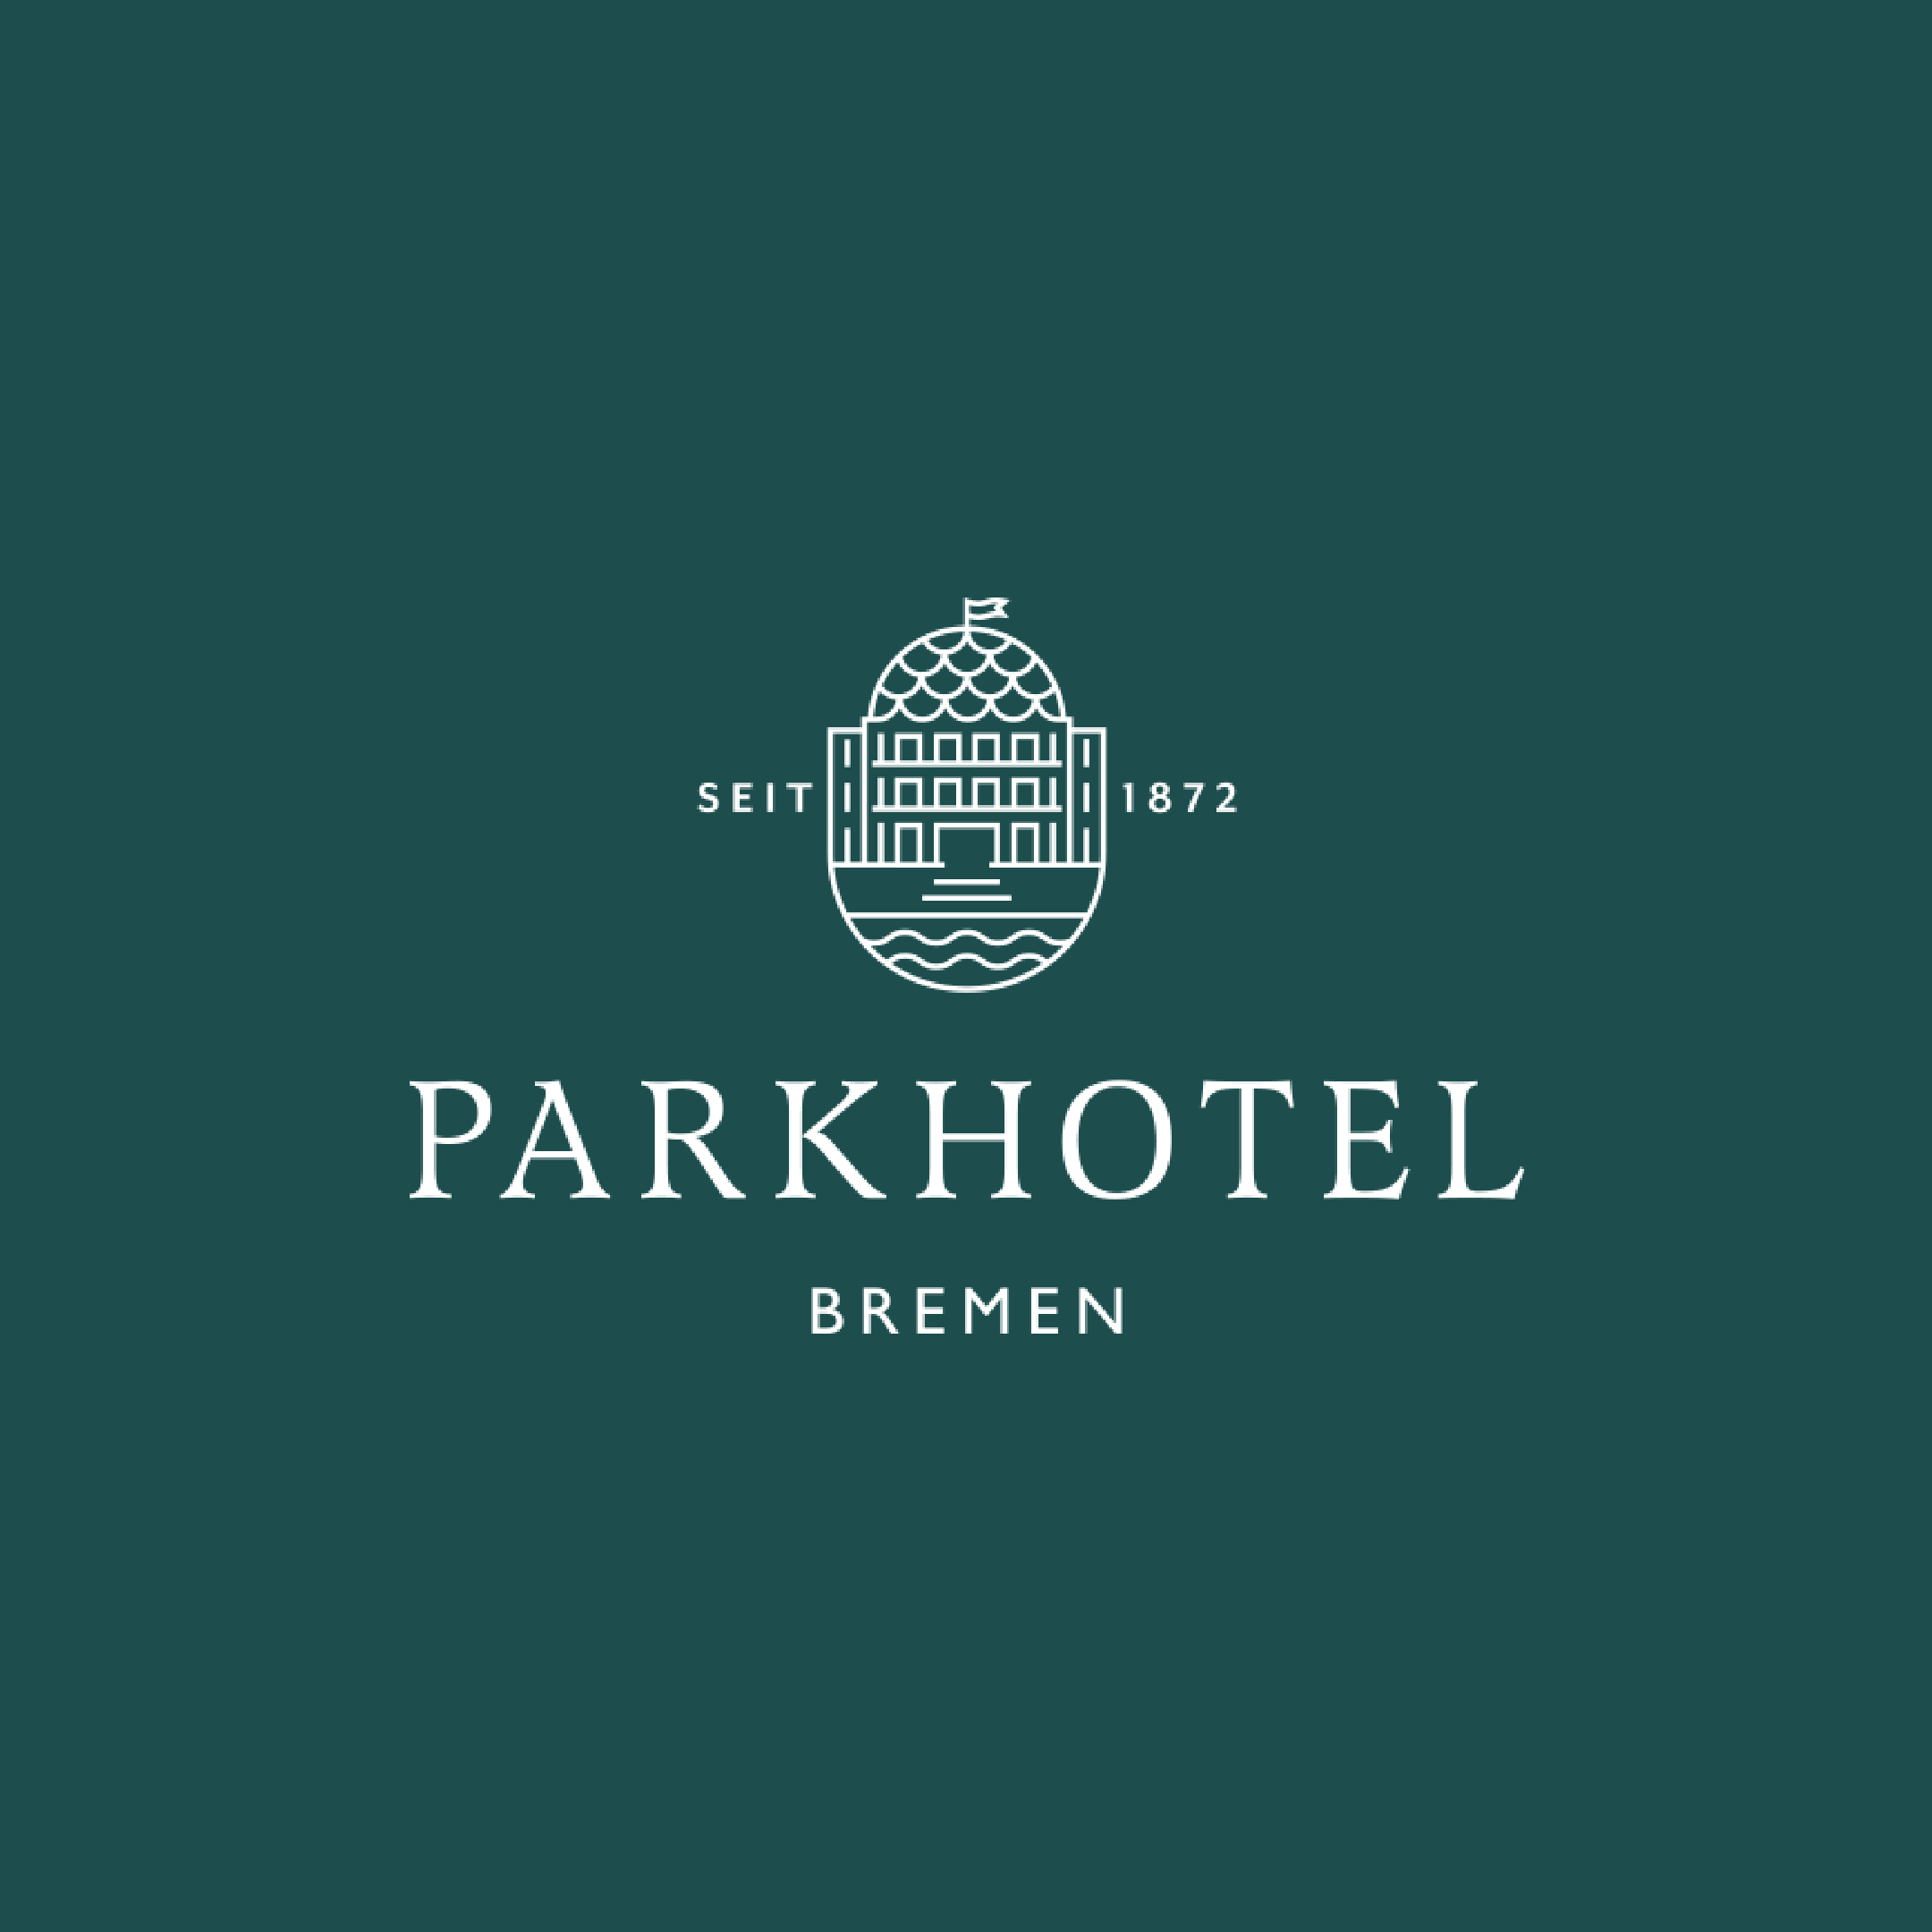 park hotel logo